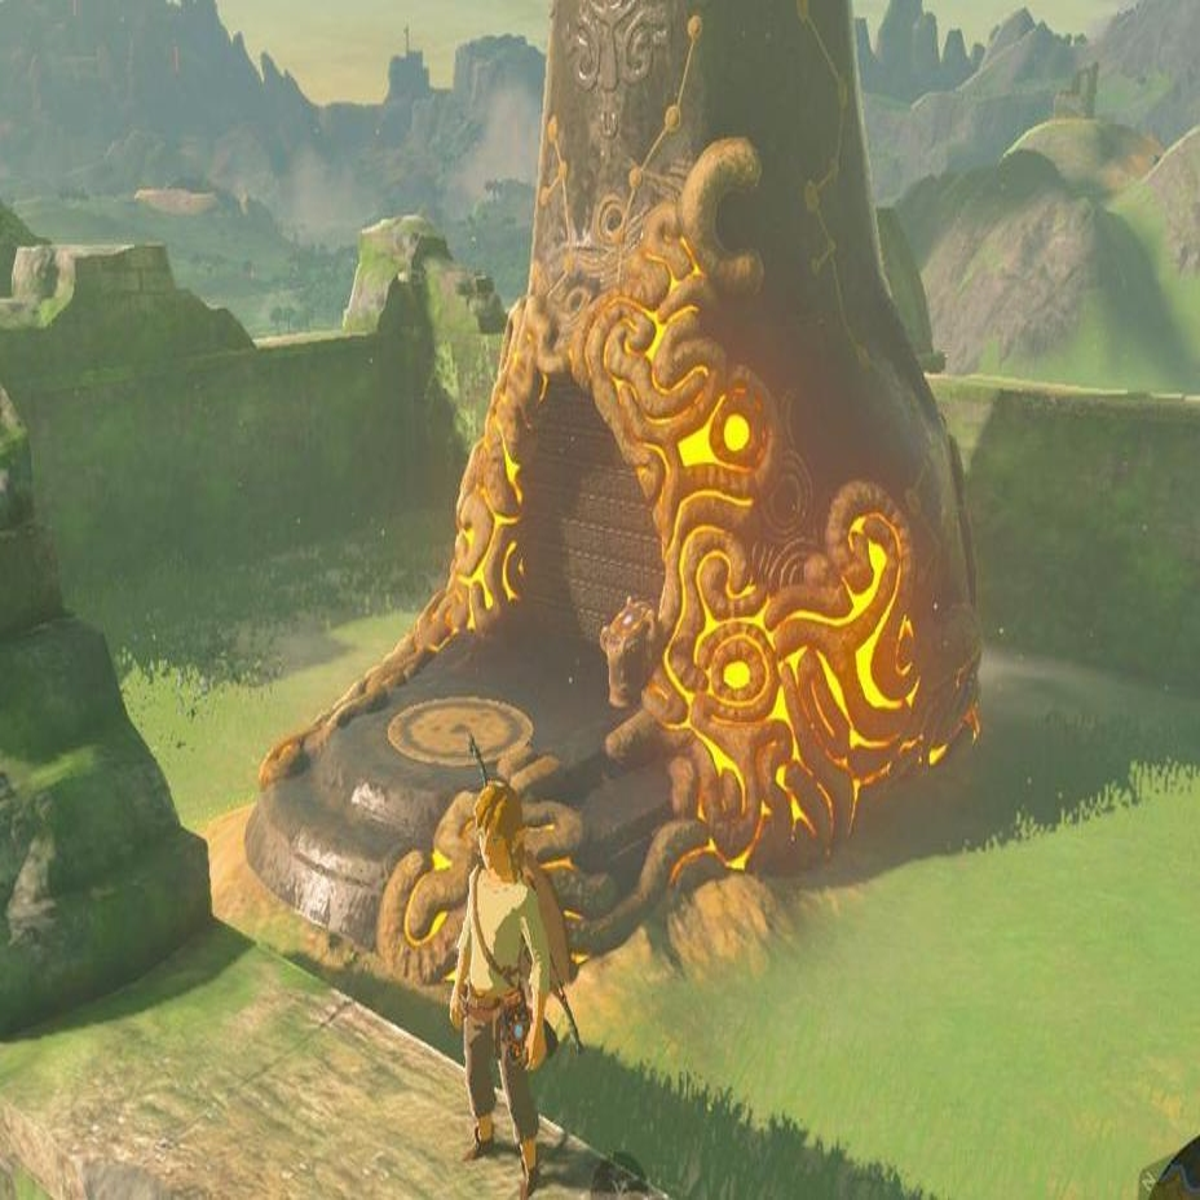 Zelda Breath of the Wild 120 shrines locations (map link in description) 